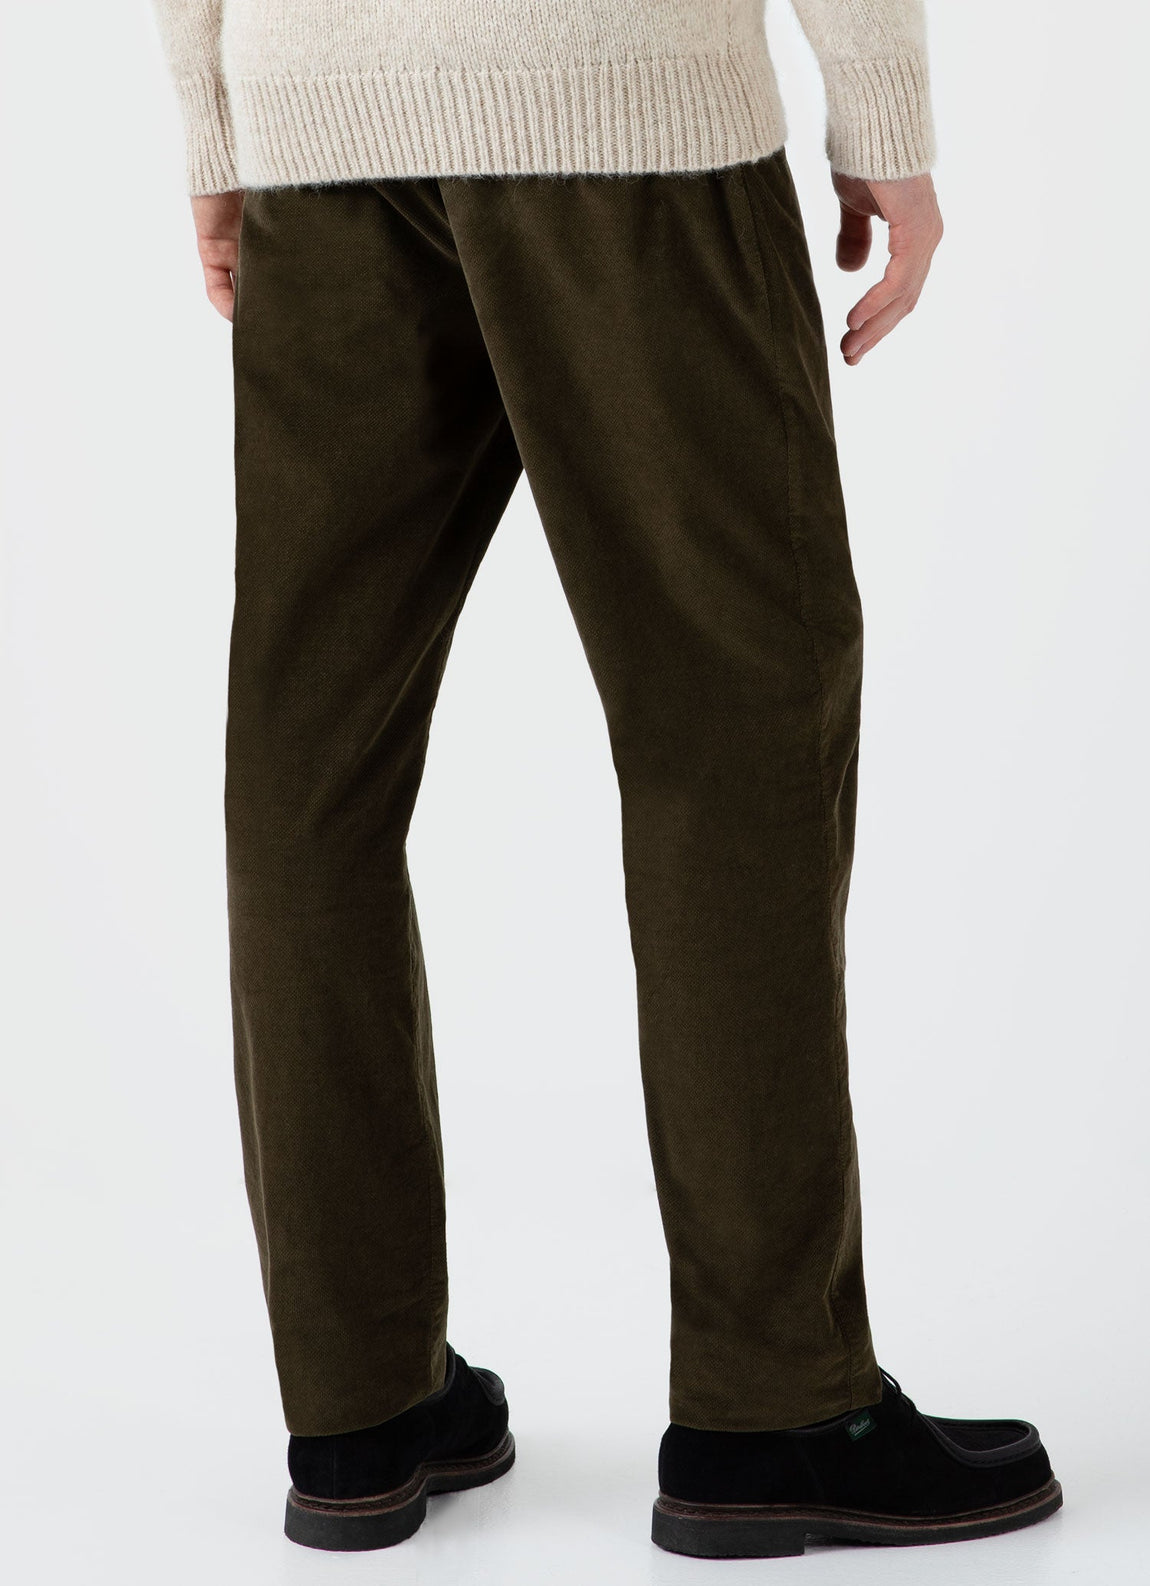 Men's Cellular Cord Drawstring Trouser in Dark Olive